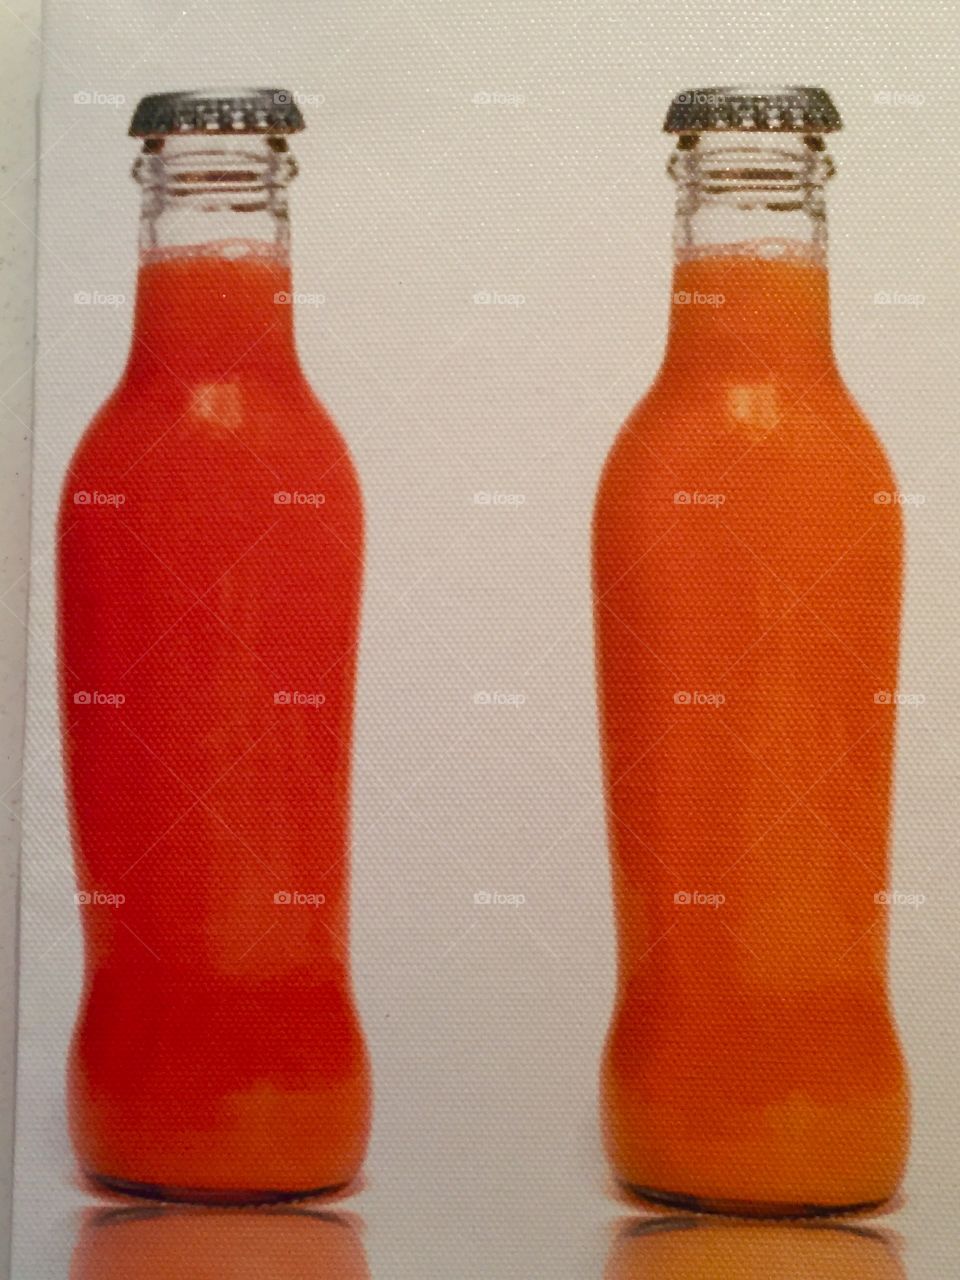 Orange bottles